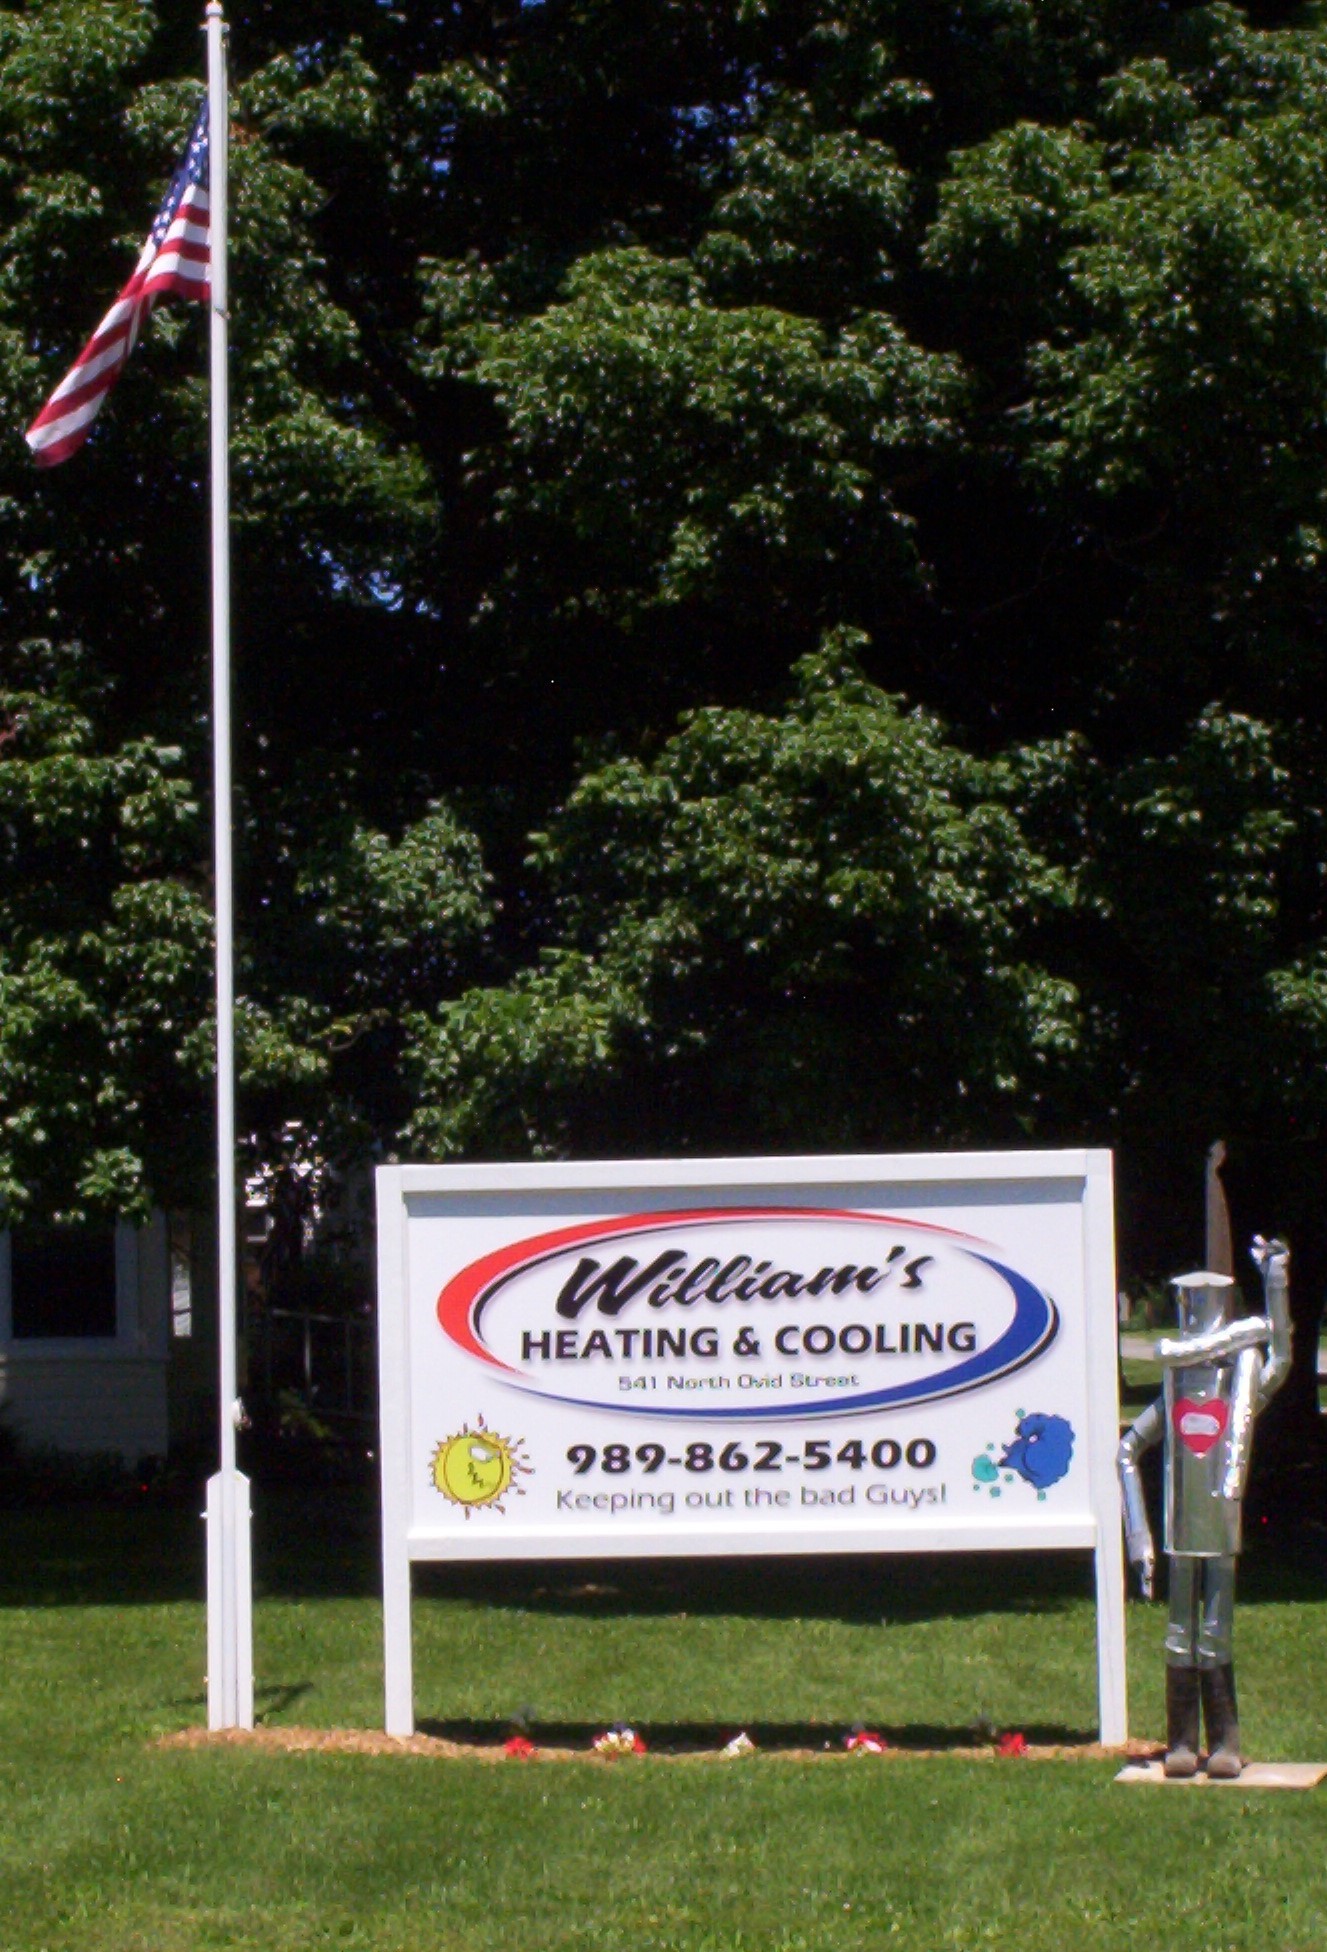 William's Heating - Cooling, Inc. 541 N Ovid St, Elsie Michigan 48831